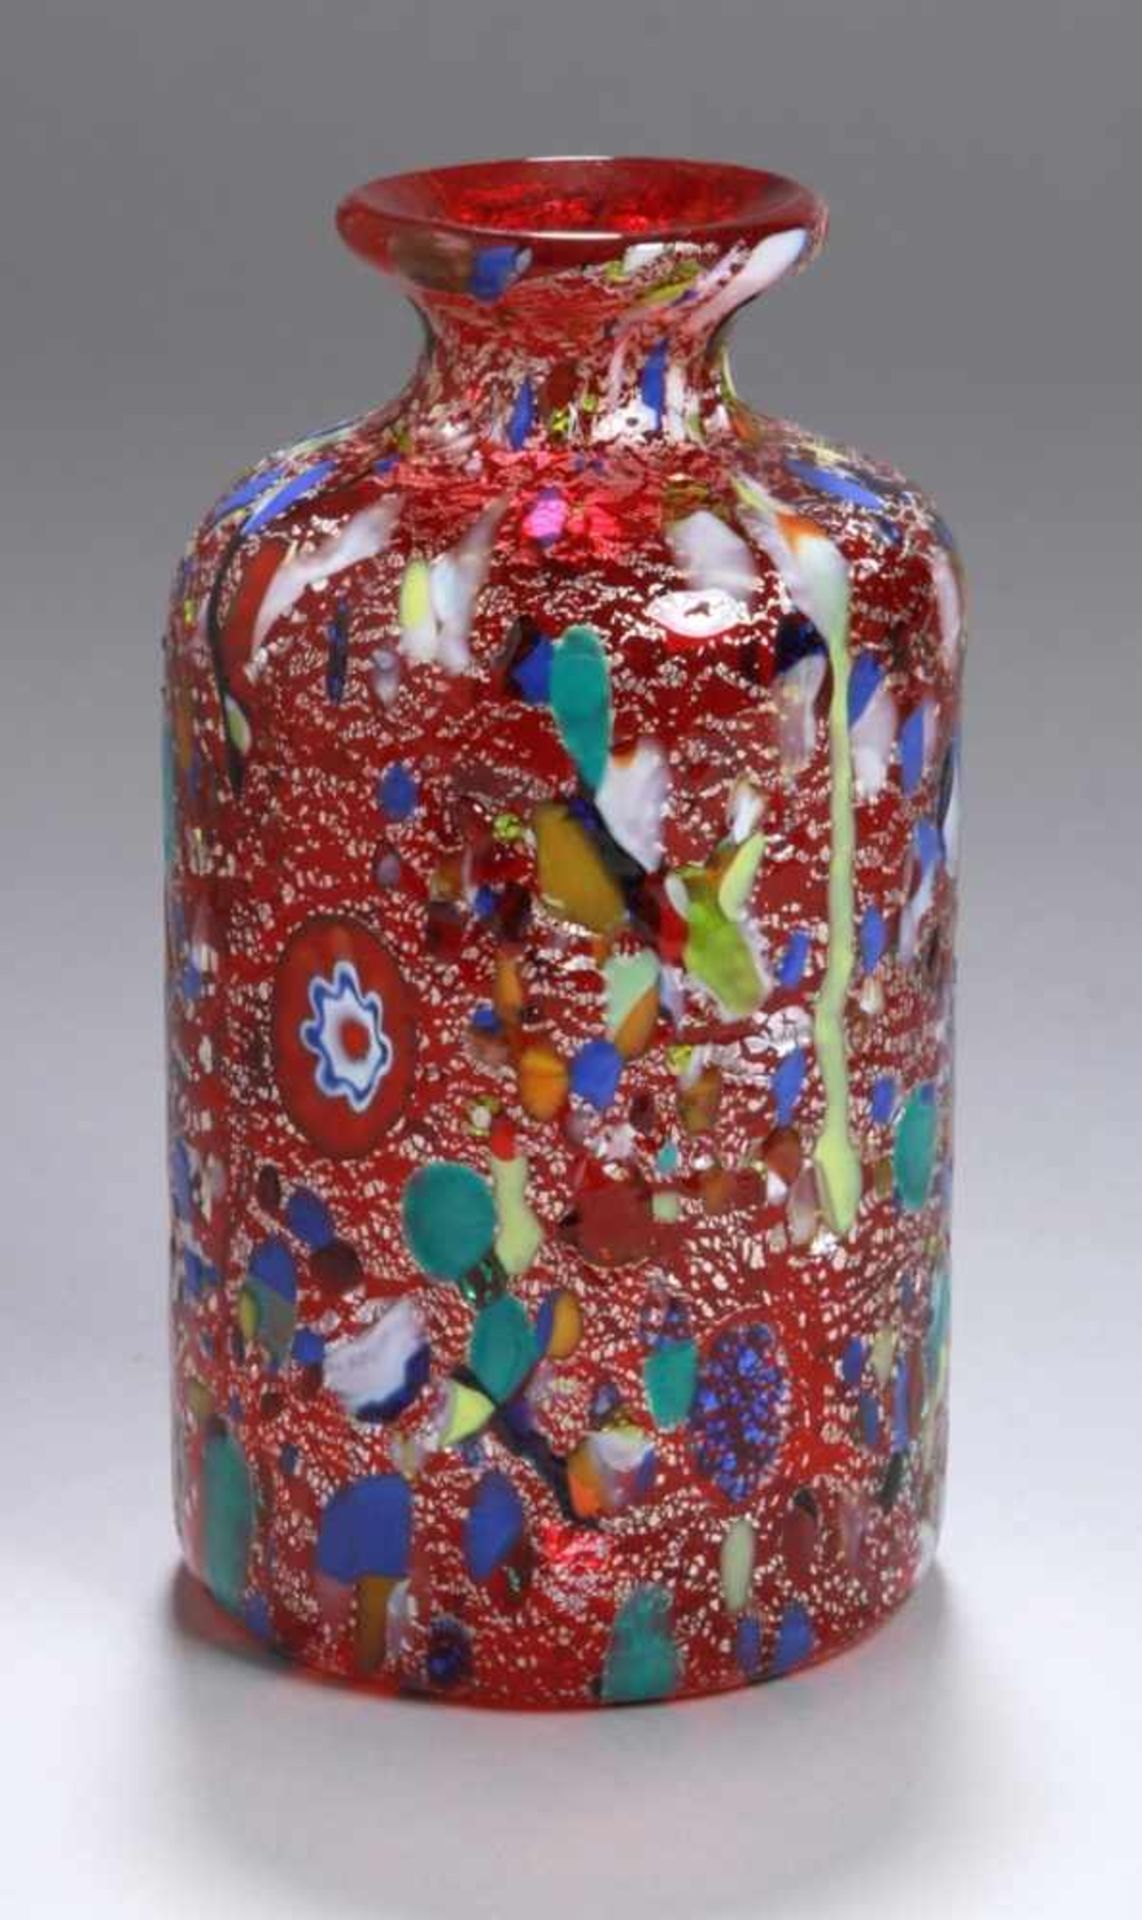 Glas-Ziervase, Murano, CC Zecchin Murano Art, neuzetlich, rubinrotes Glas, Wandungdekoriert mit